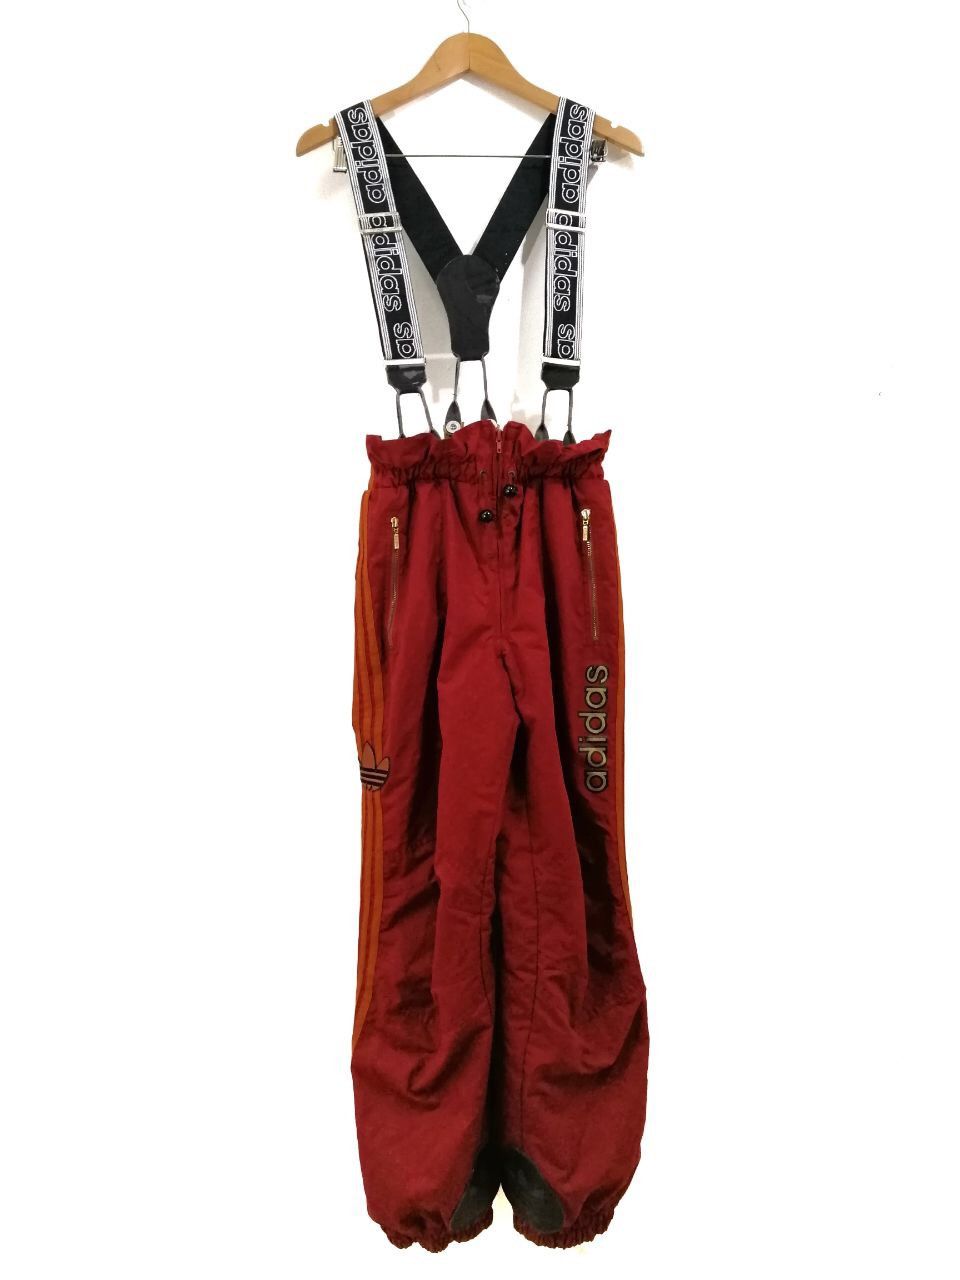 Vintage Adidas Orange Color Ski Wear Pants Overall Size L - 1